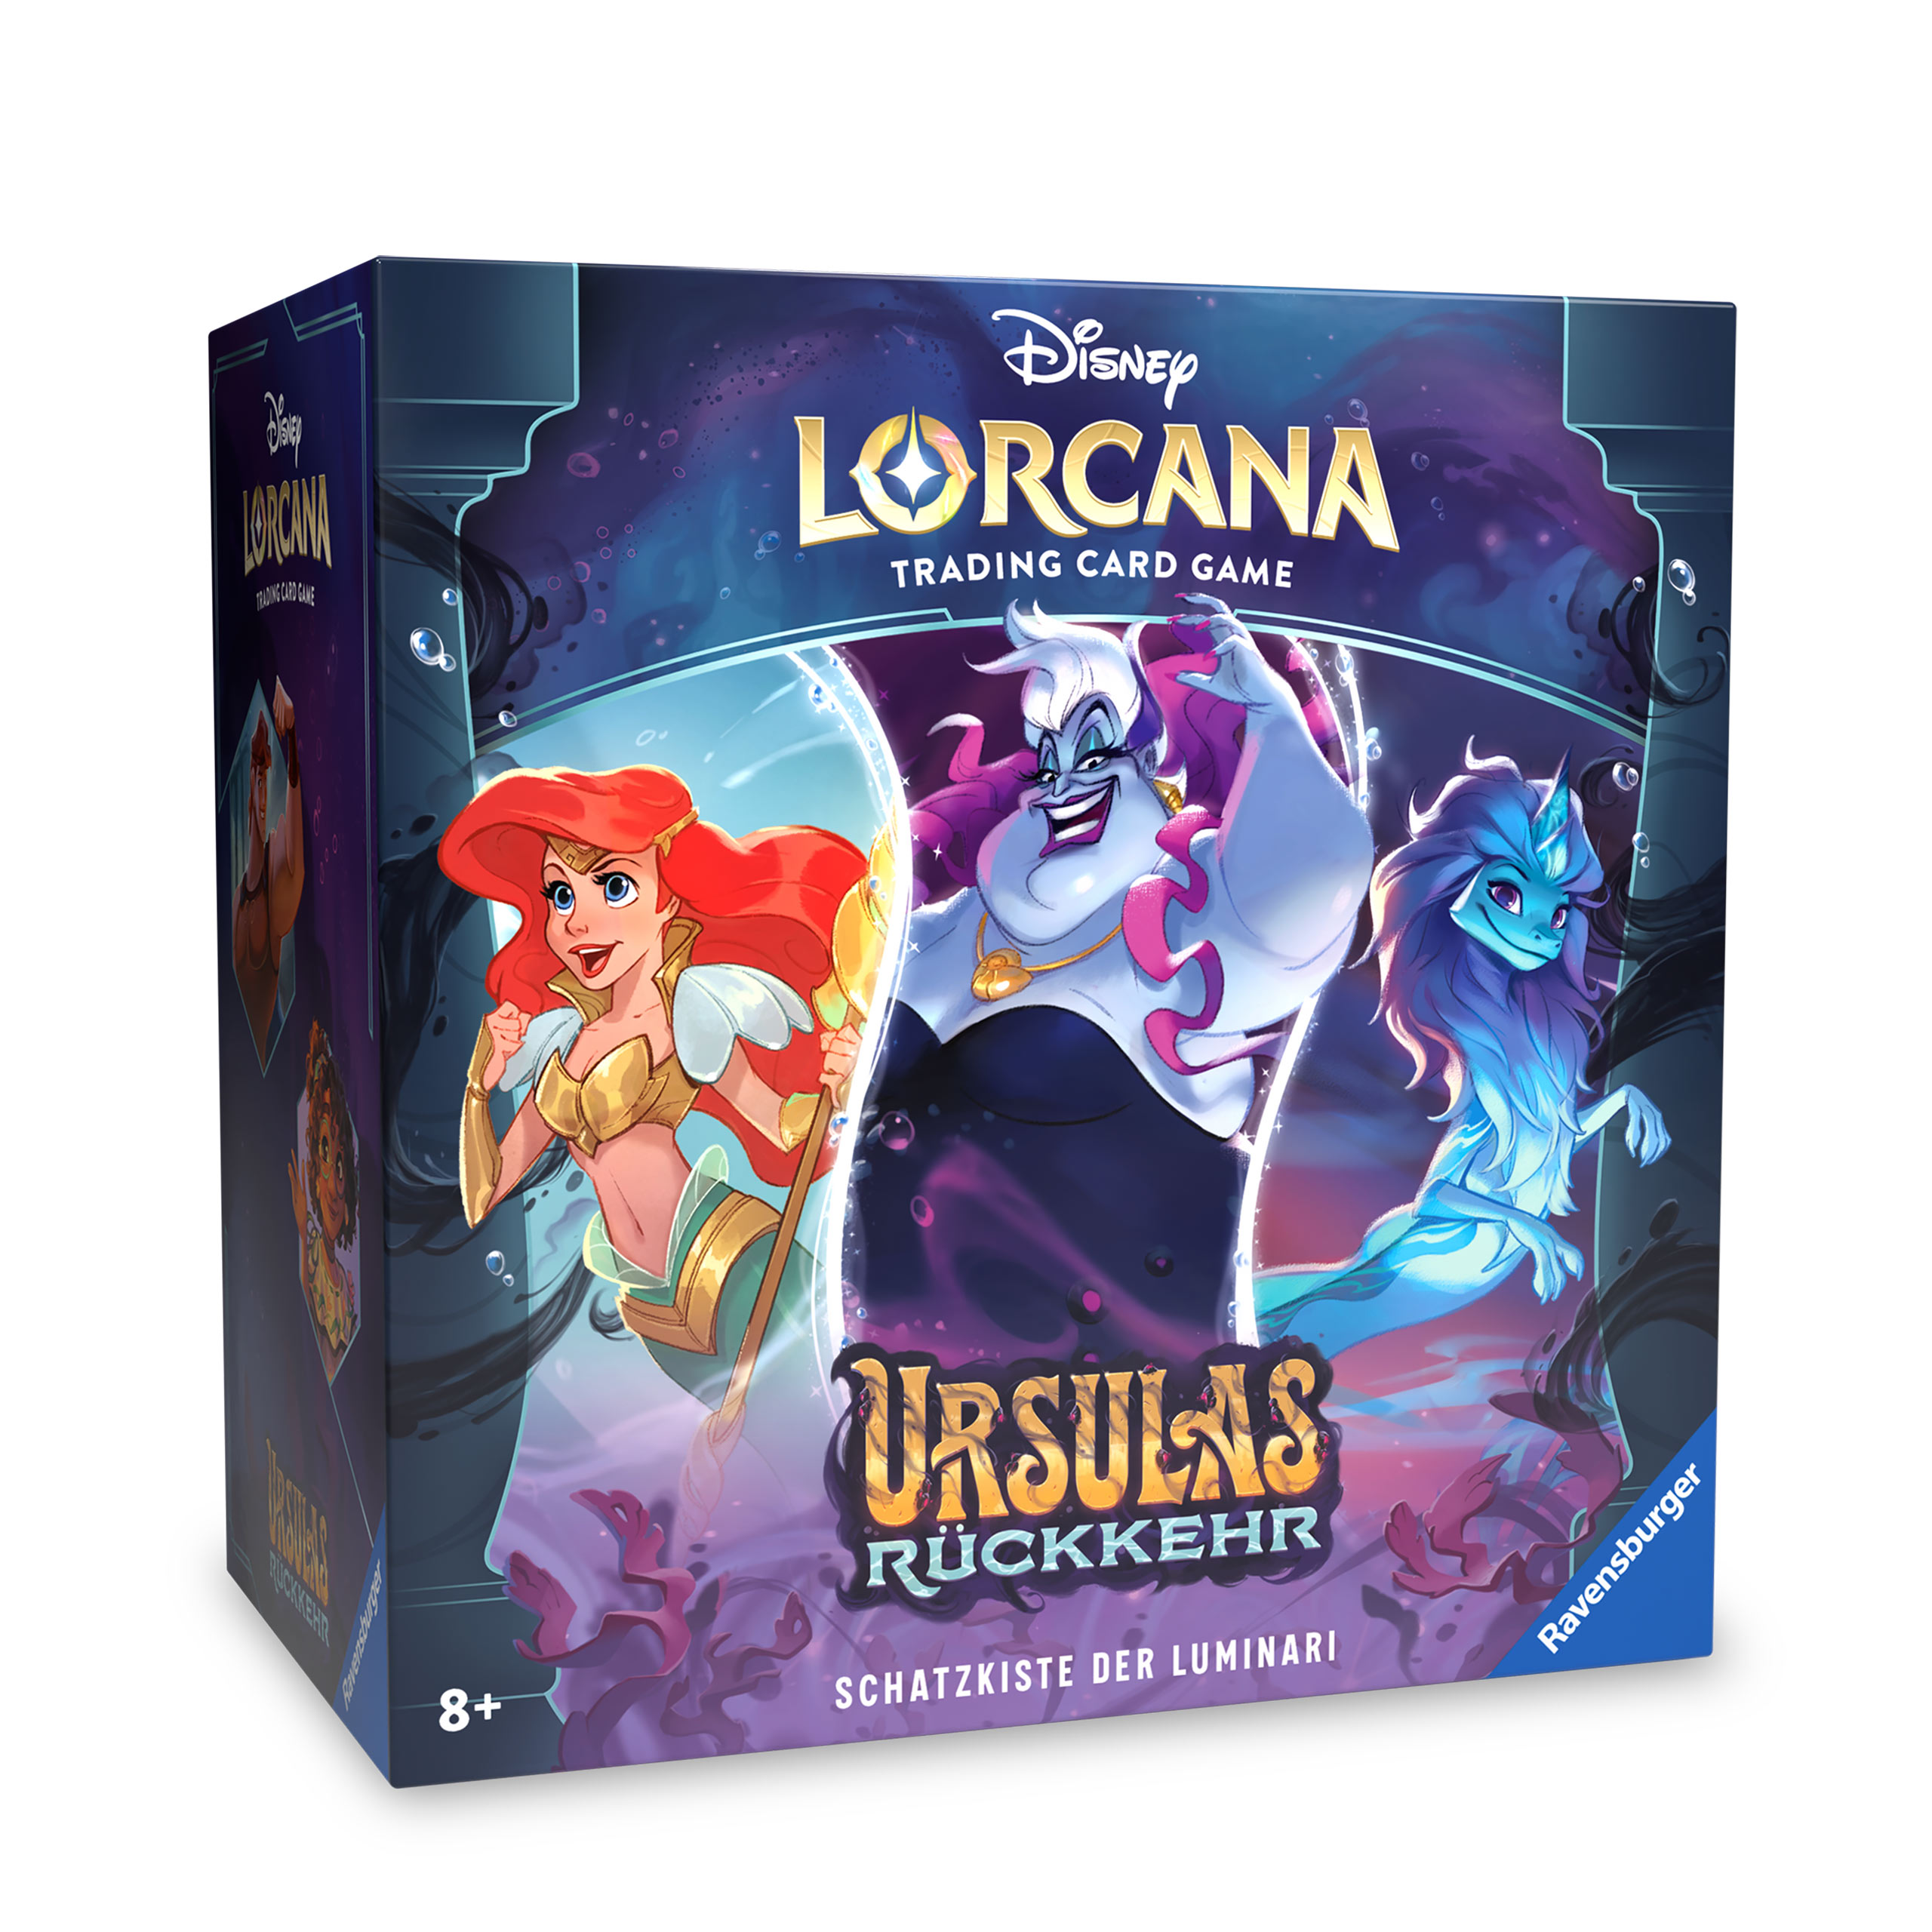 Disney Lorcana Schatzkiste der Luminari - Ursulas Rückkehr Trading Card Game